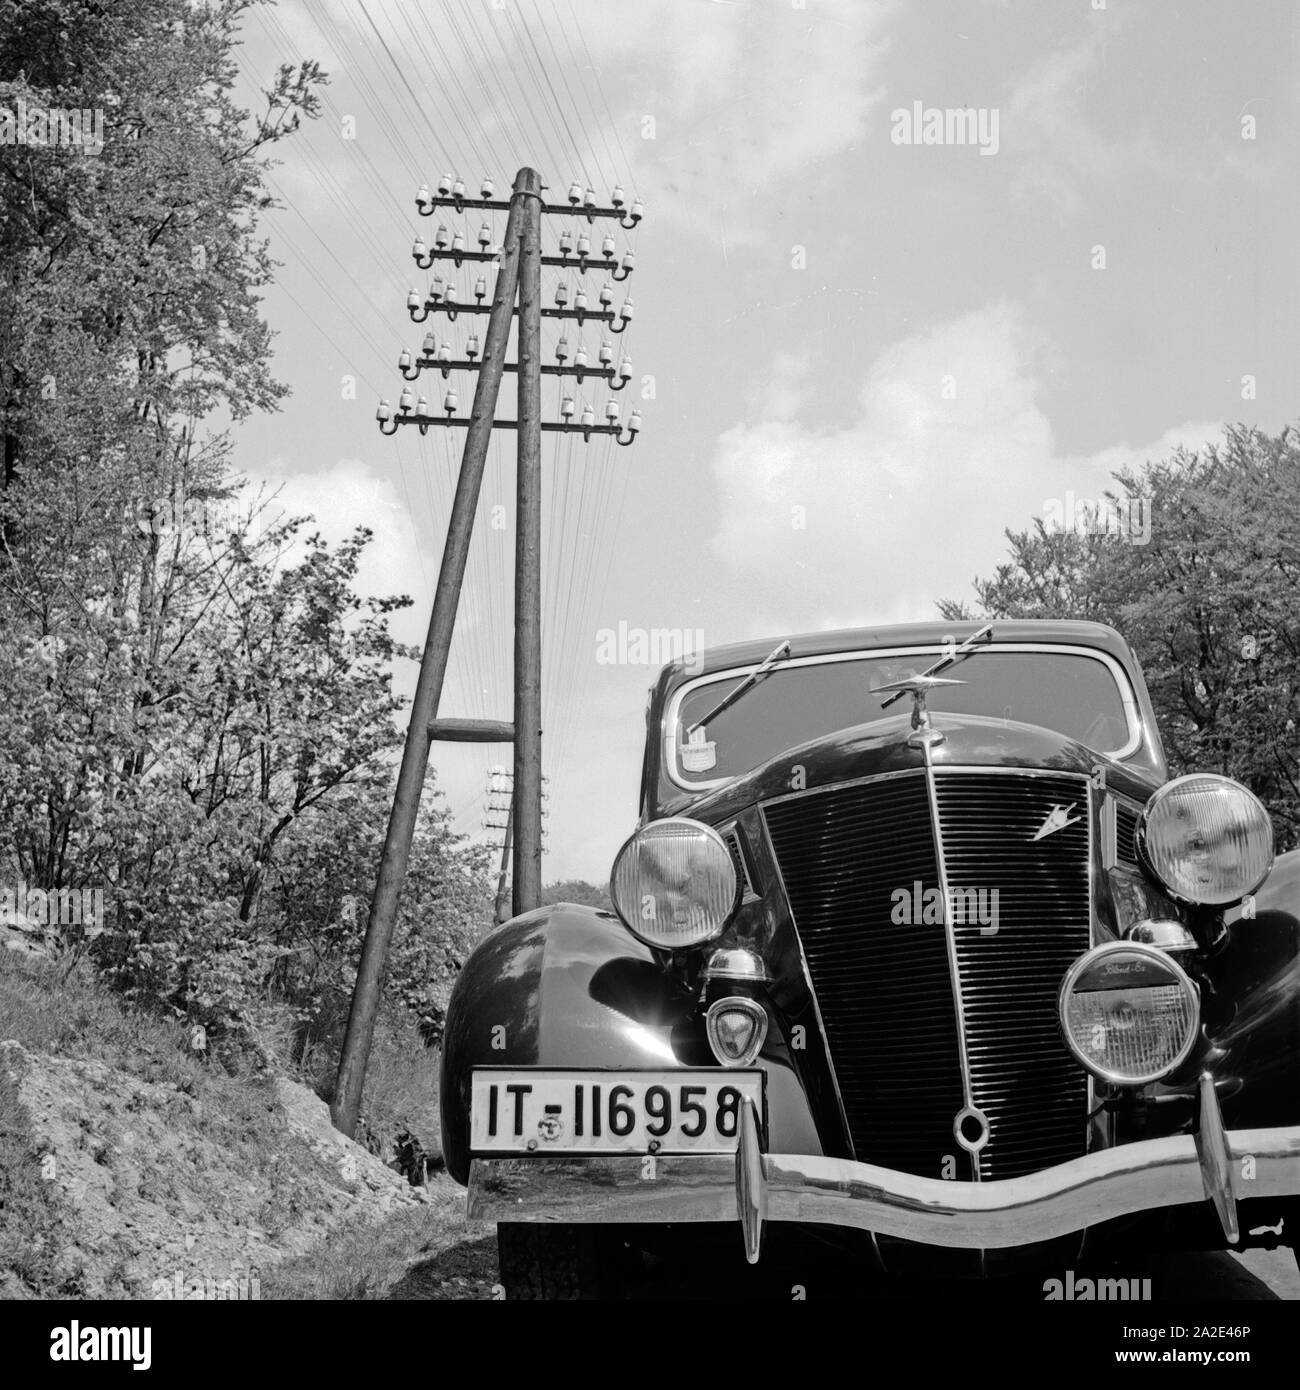 Mit dem Ford V8 unterwegs im Deutschen Reich, Deutschland 1930 er Jahre. La conduite dans le Reich dans une Ford V8, l'Allemagne des années 1930. Banque D'Images